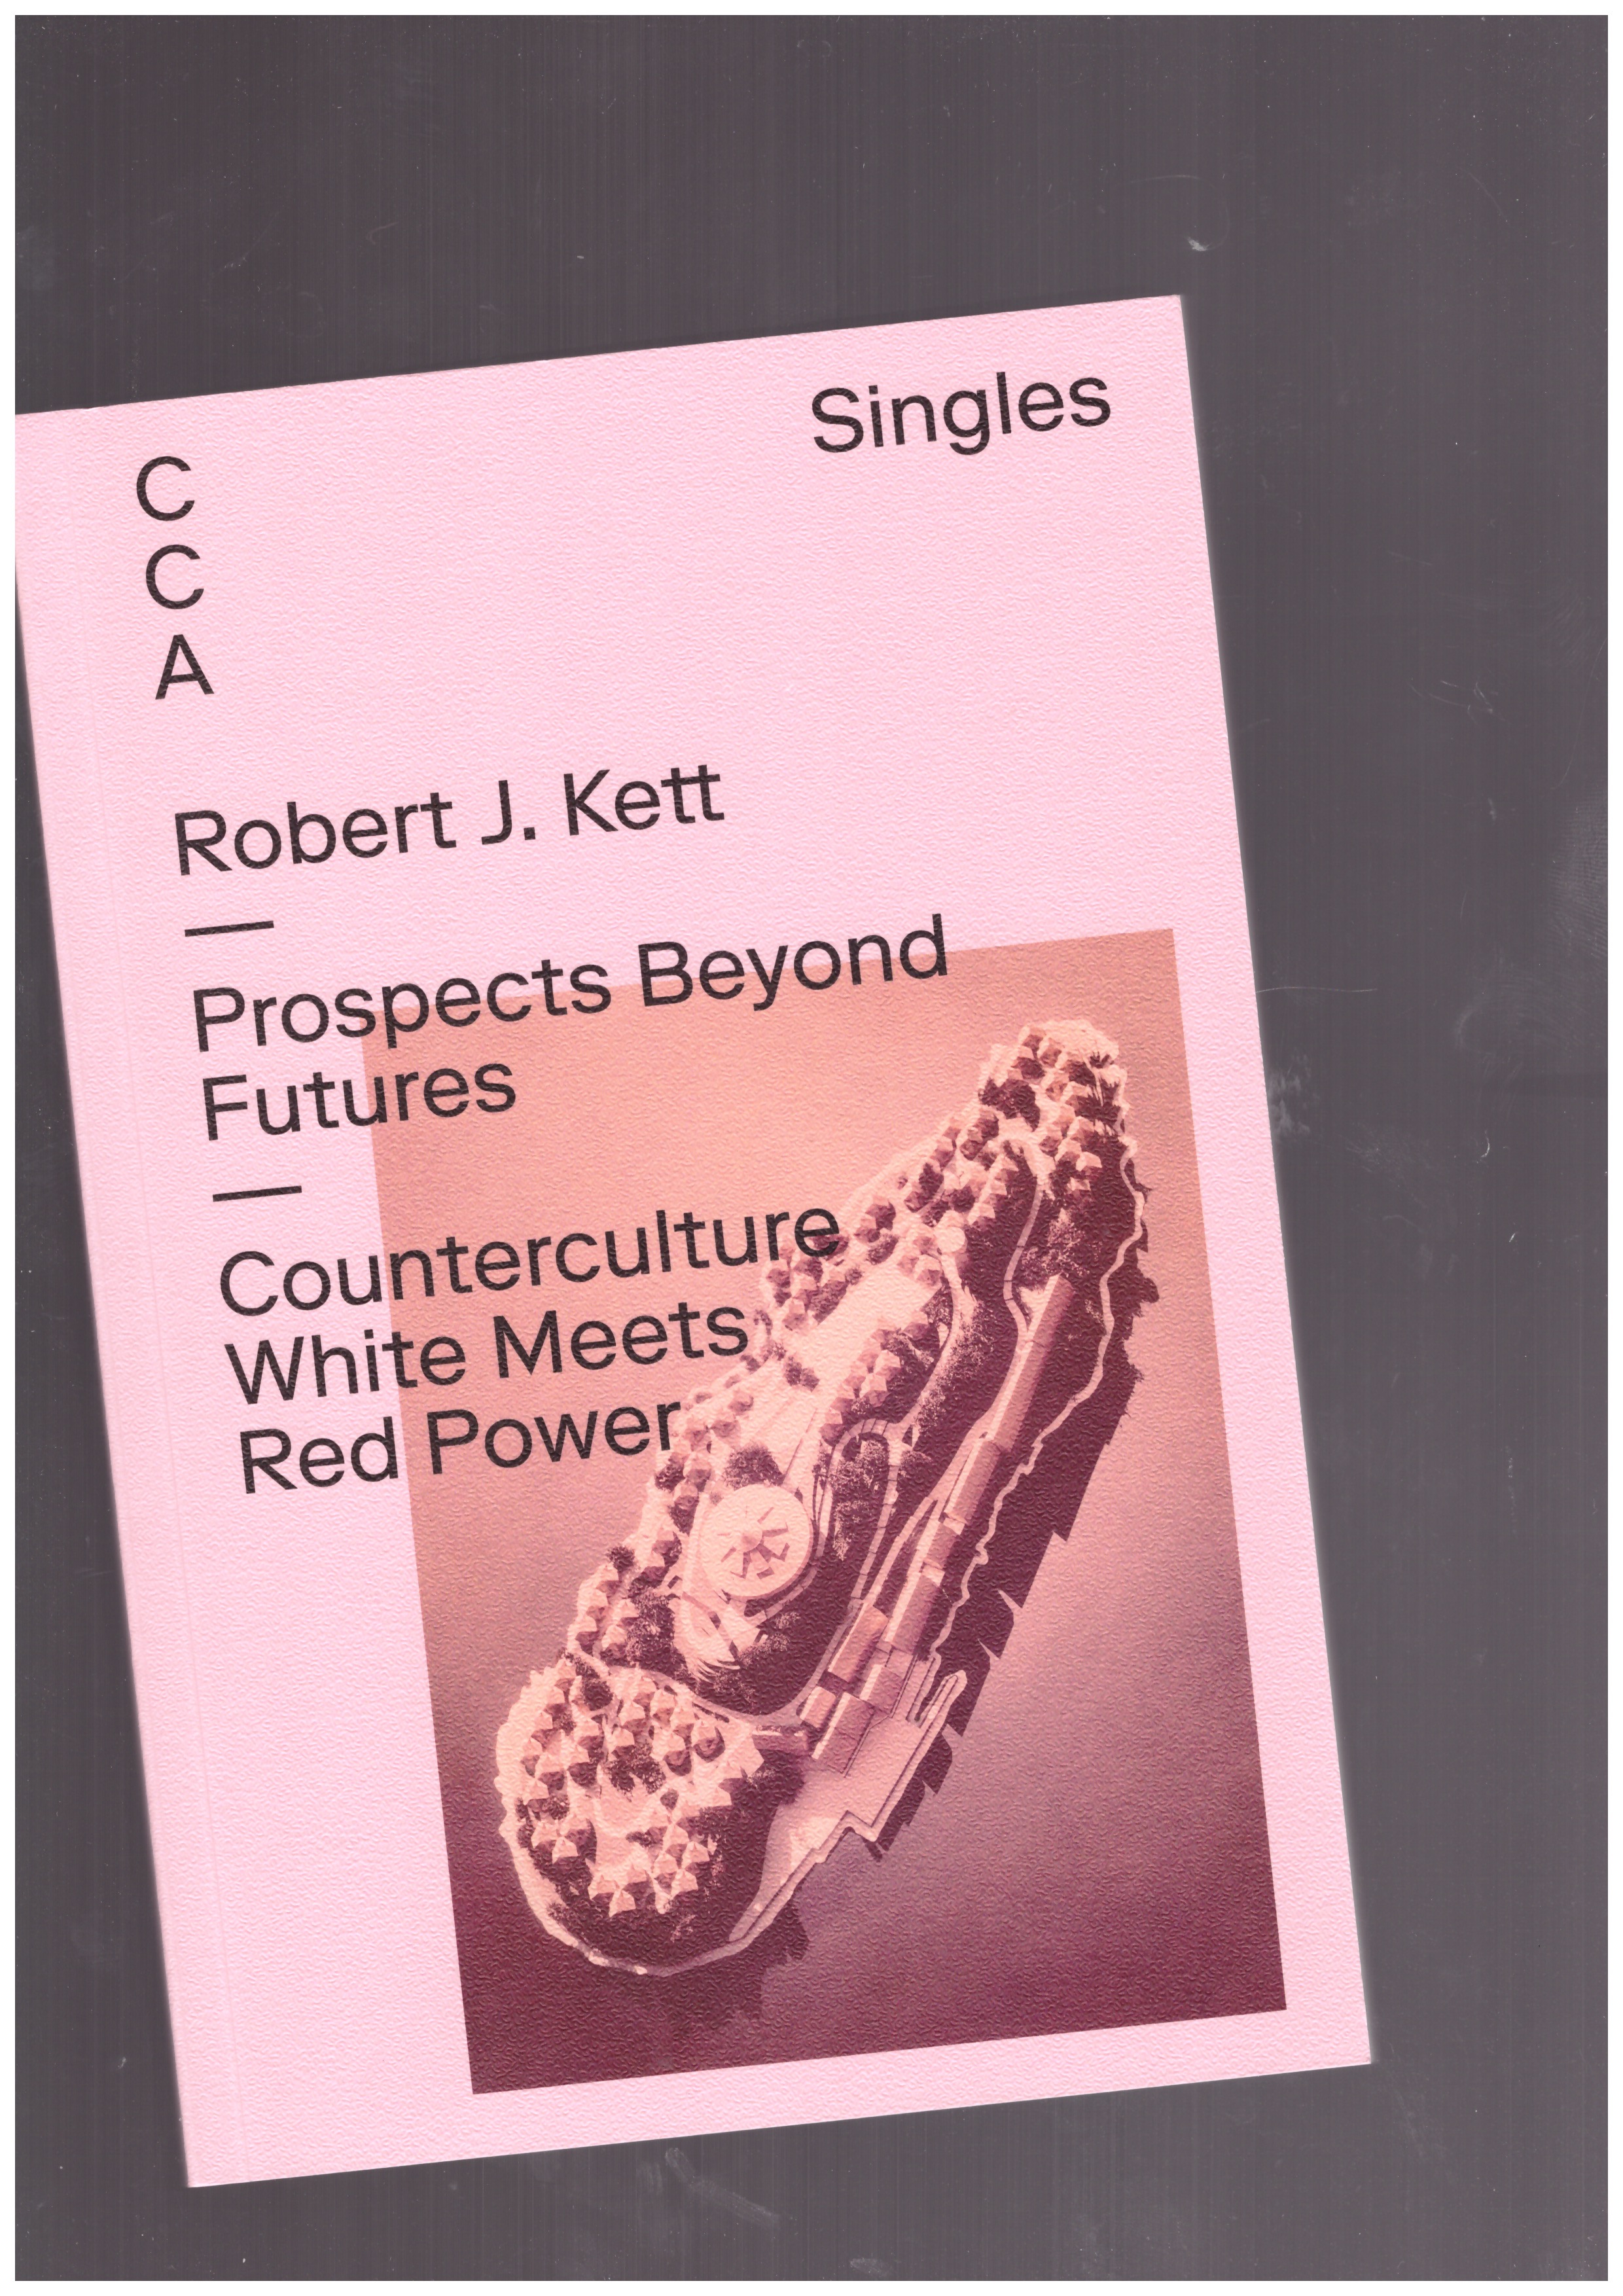 KETT, Robert J. - CCA Singles - Prospects Beyond Futures - Counterculture White Meets Red Power